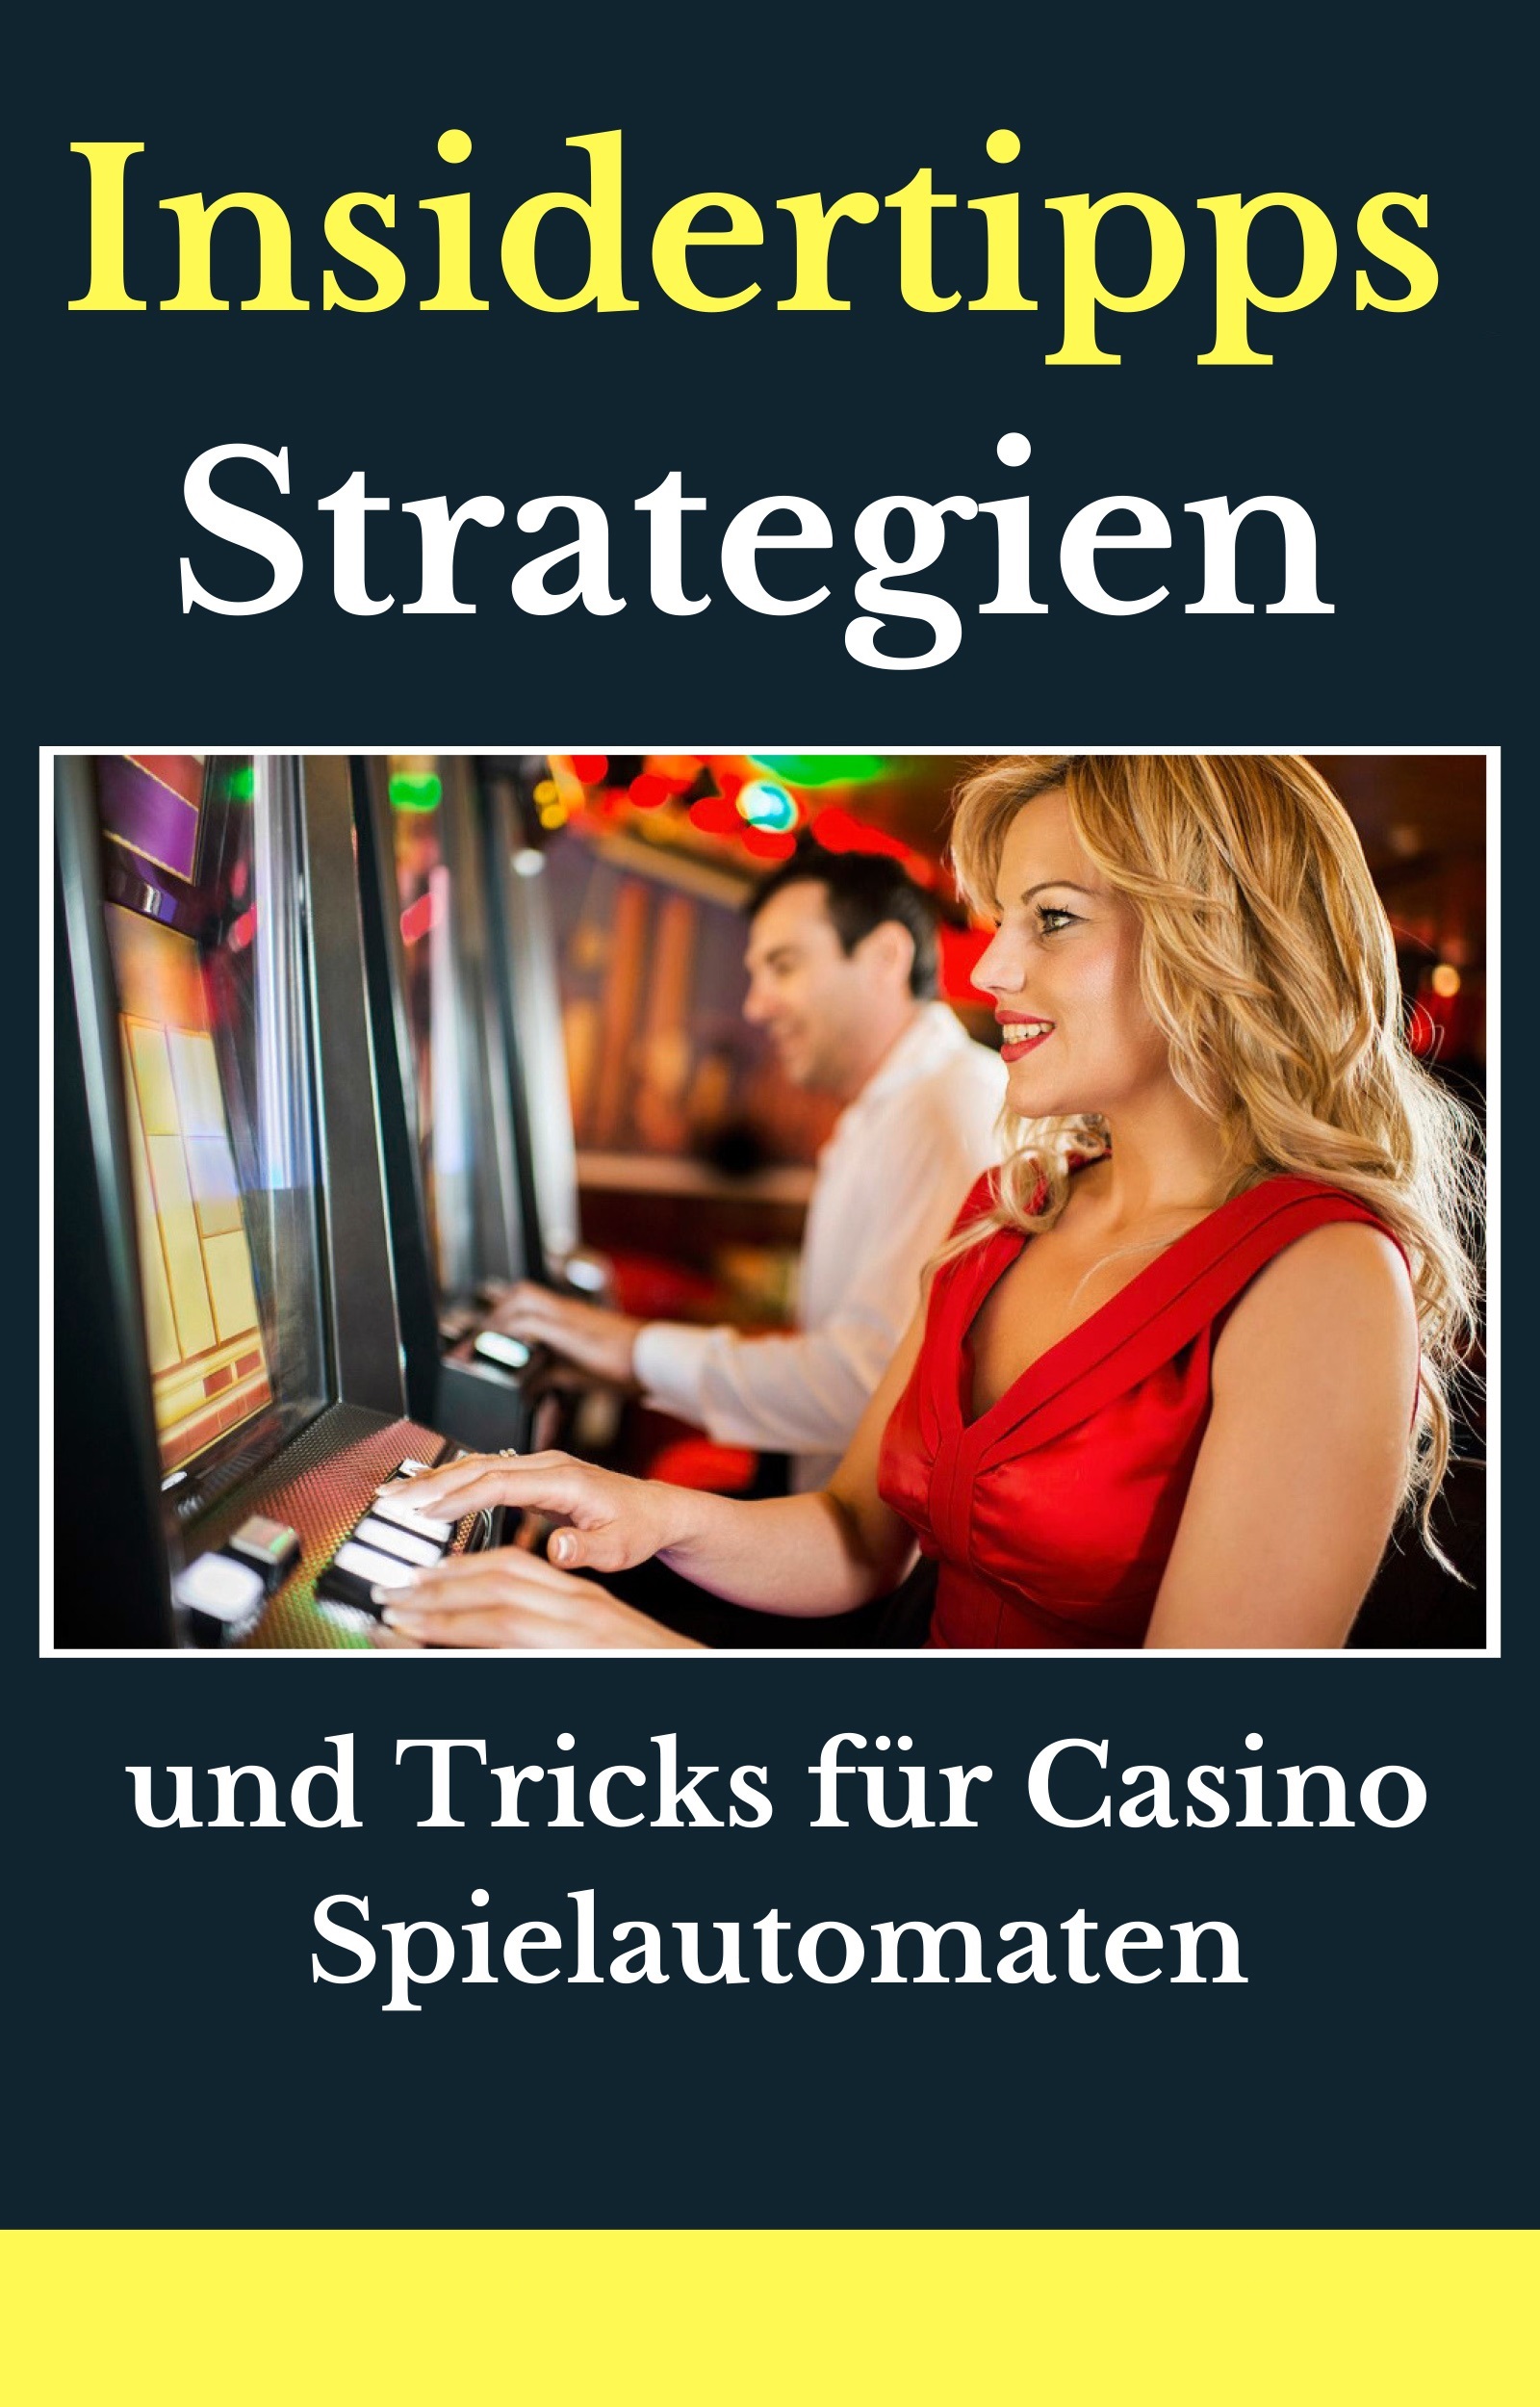 Casino Trickbuch